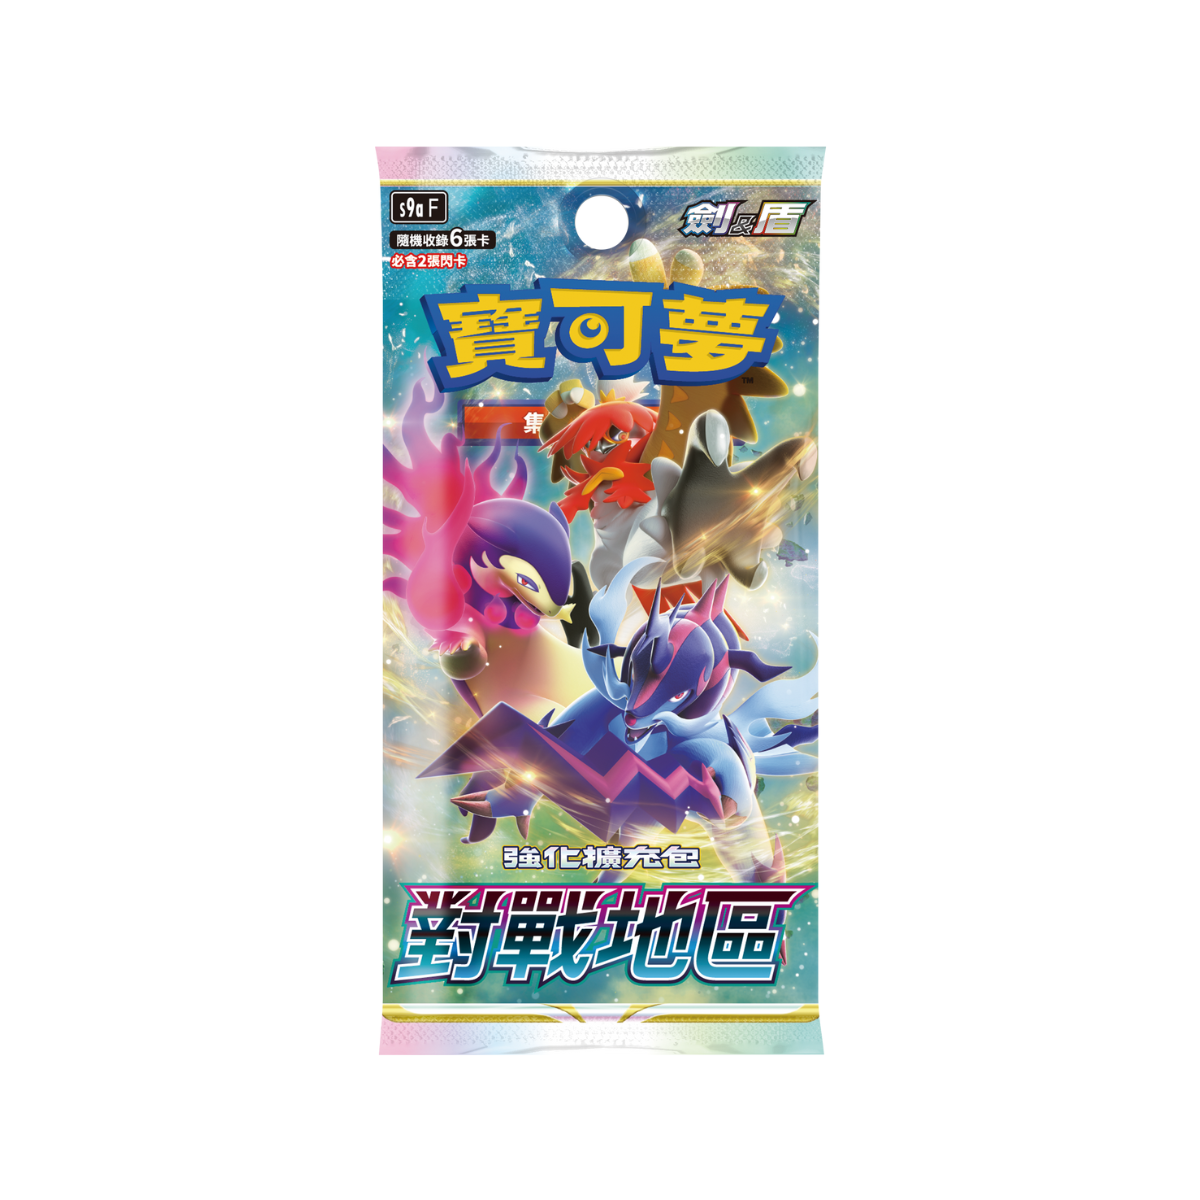 Pokemon TCG 剑 & 盾 强化擴充包 對戰地區 [S9aF] (Chinese)-Single Pack (Random)-The Pokémon Company International-Ace Cards & Collectibles